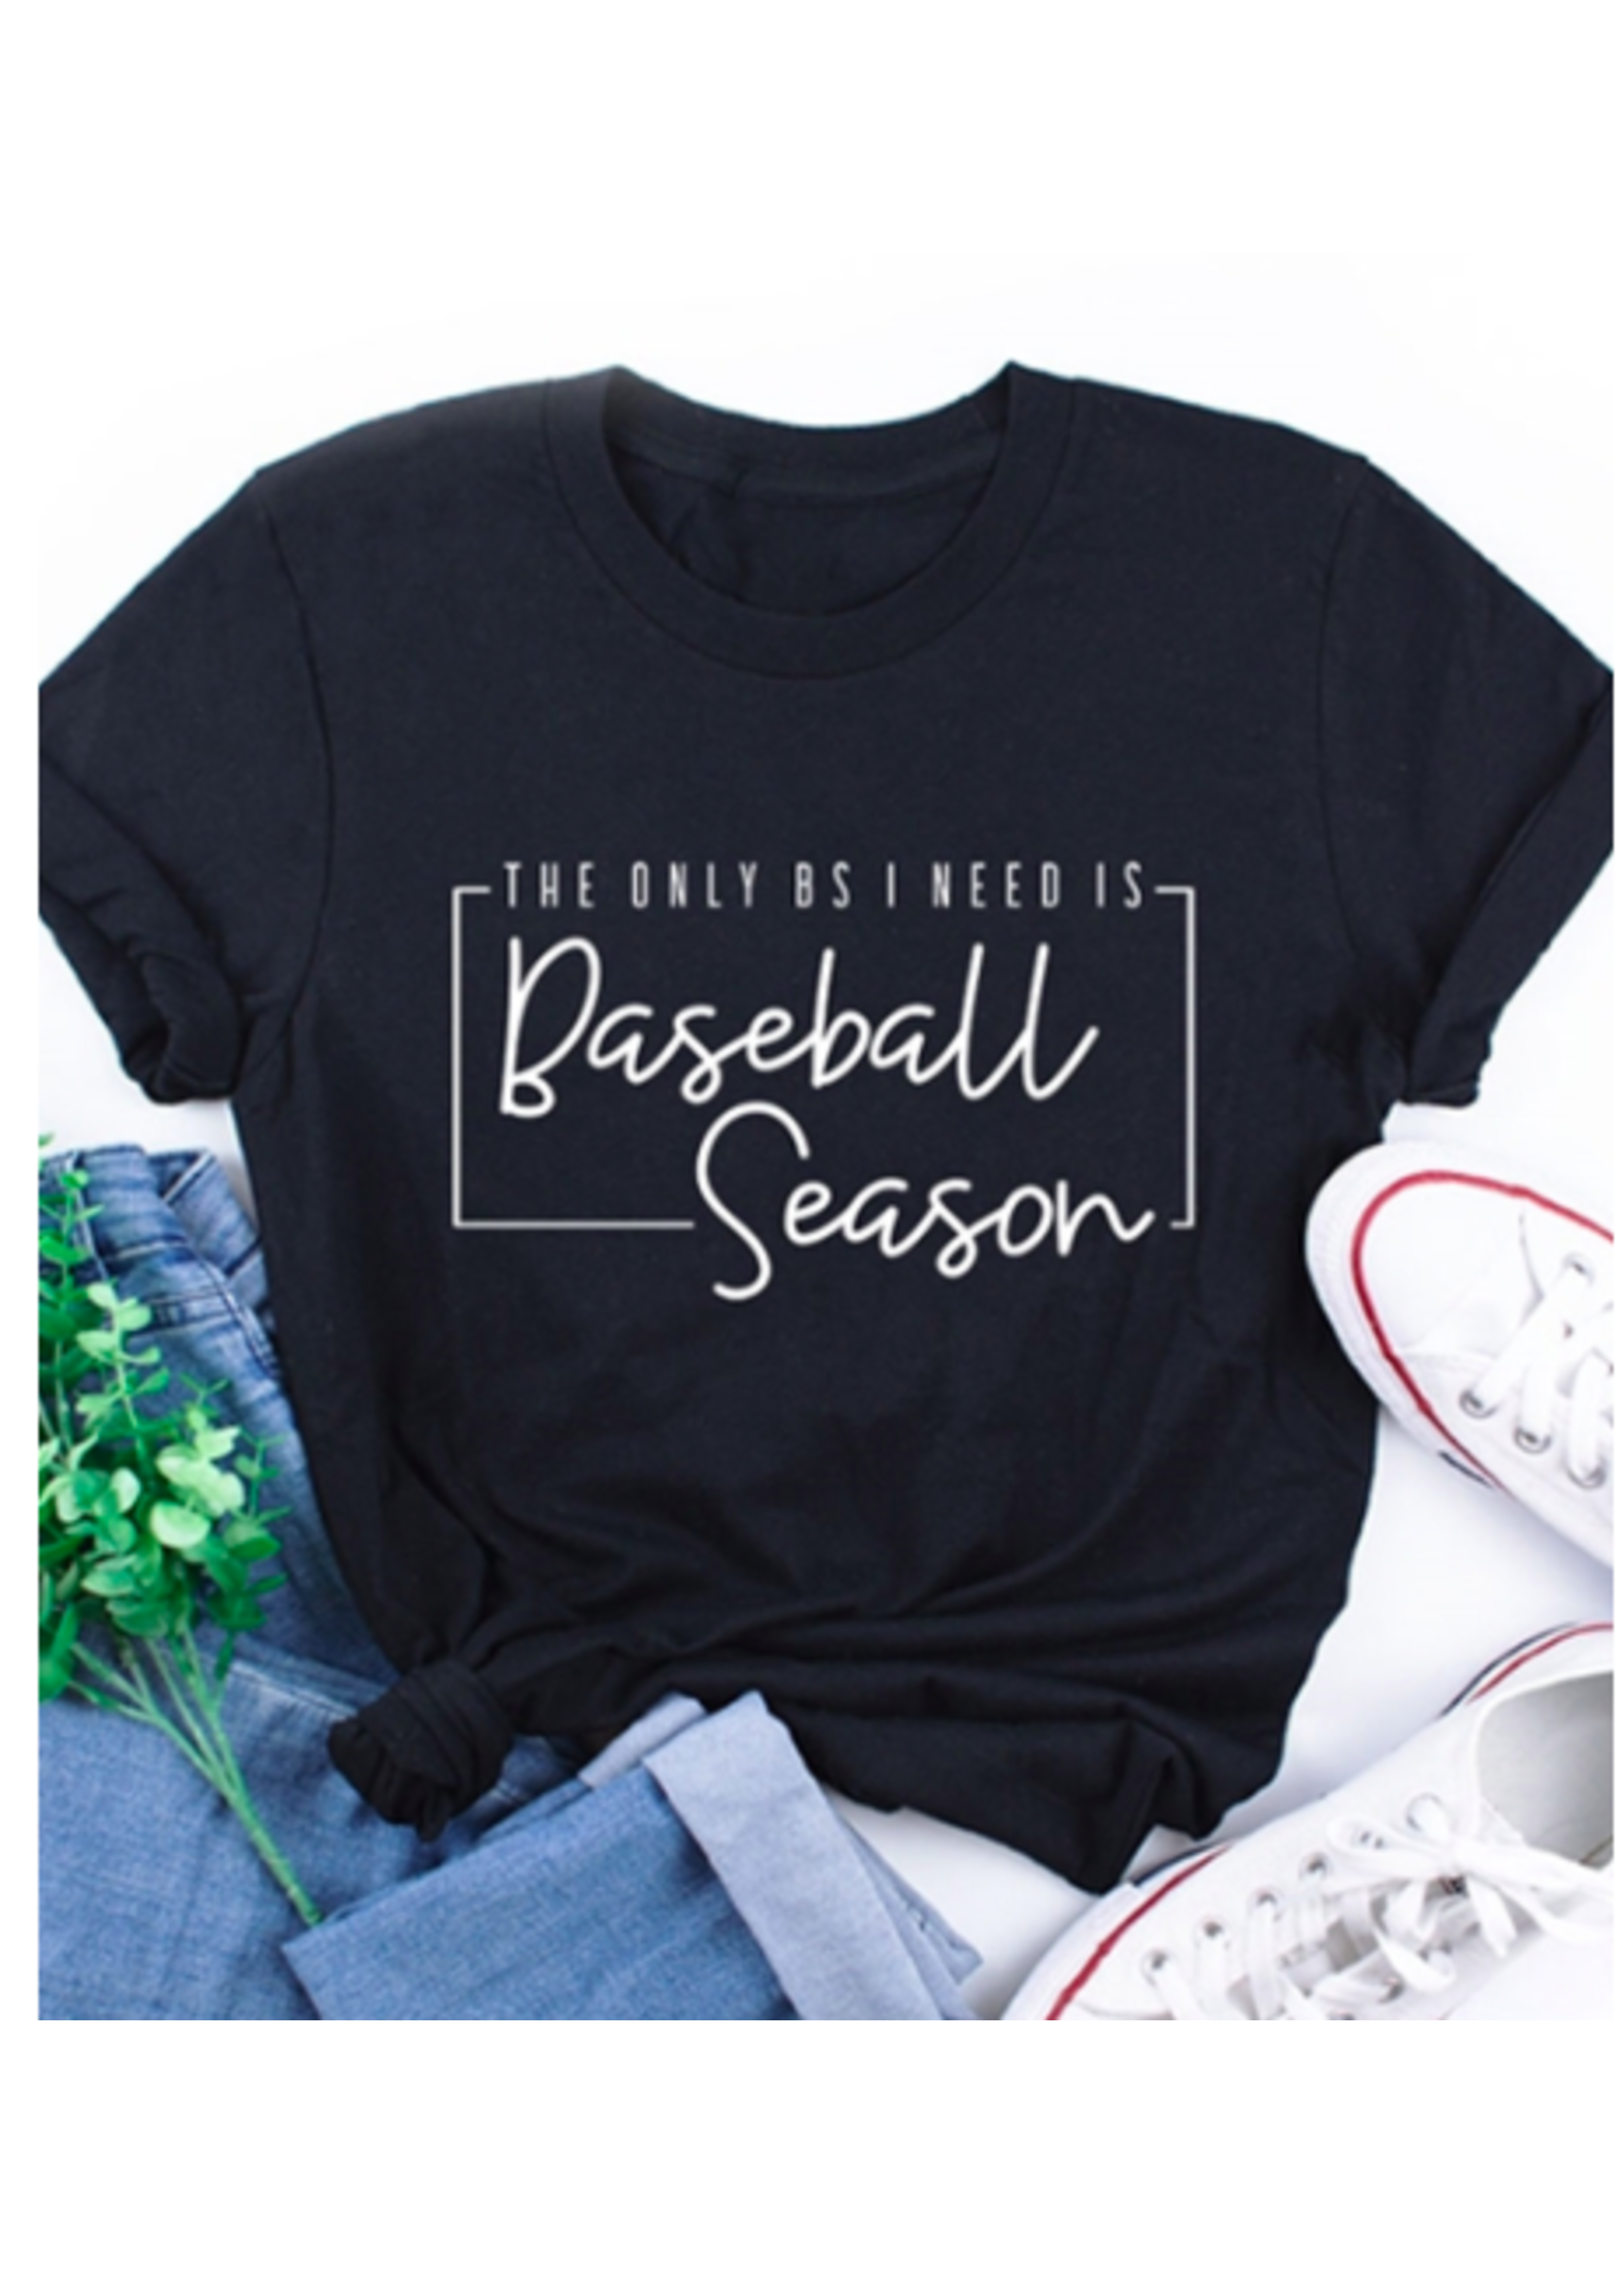 The only BS I need is Baseball Season T-Shirt